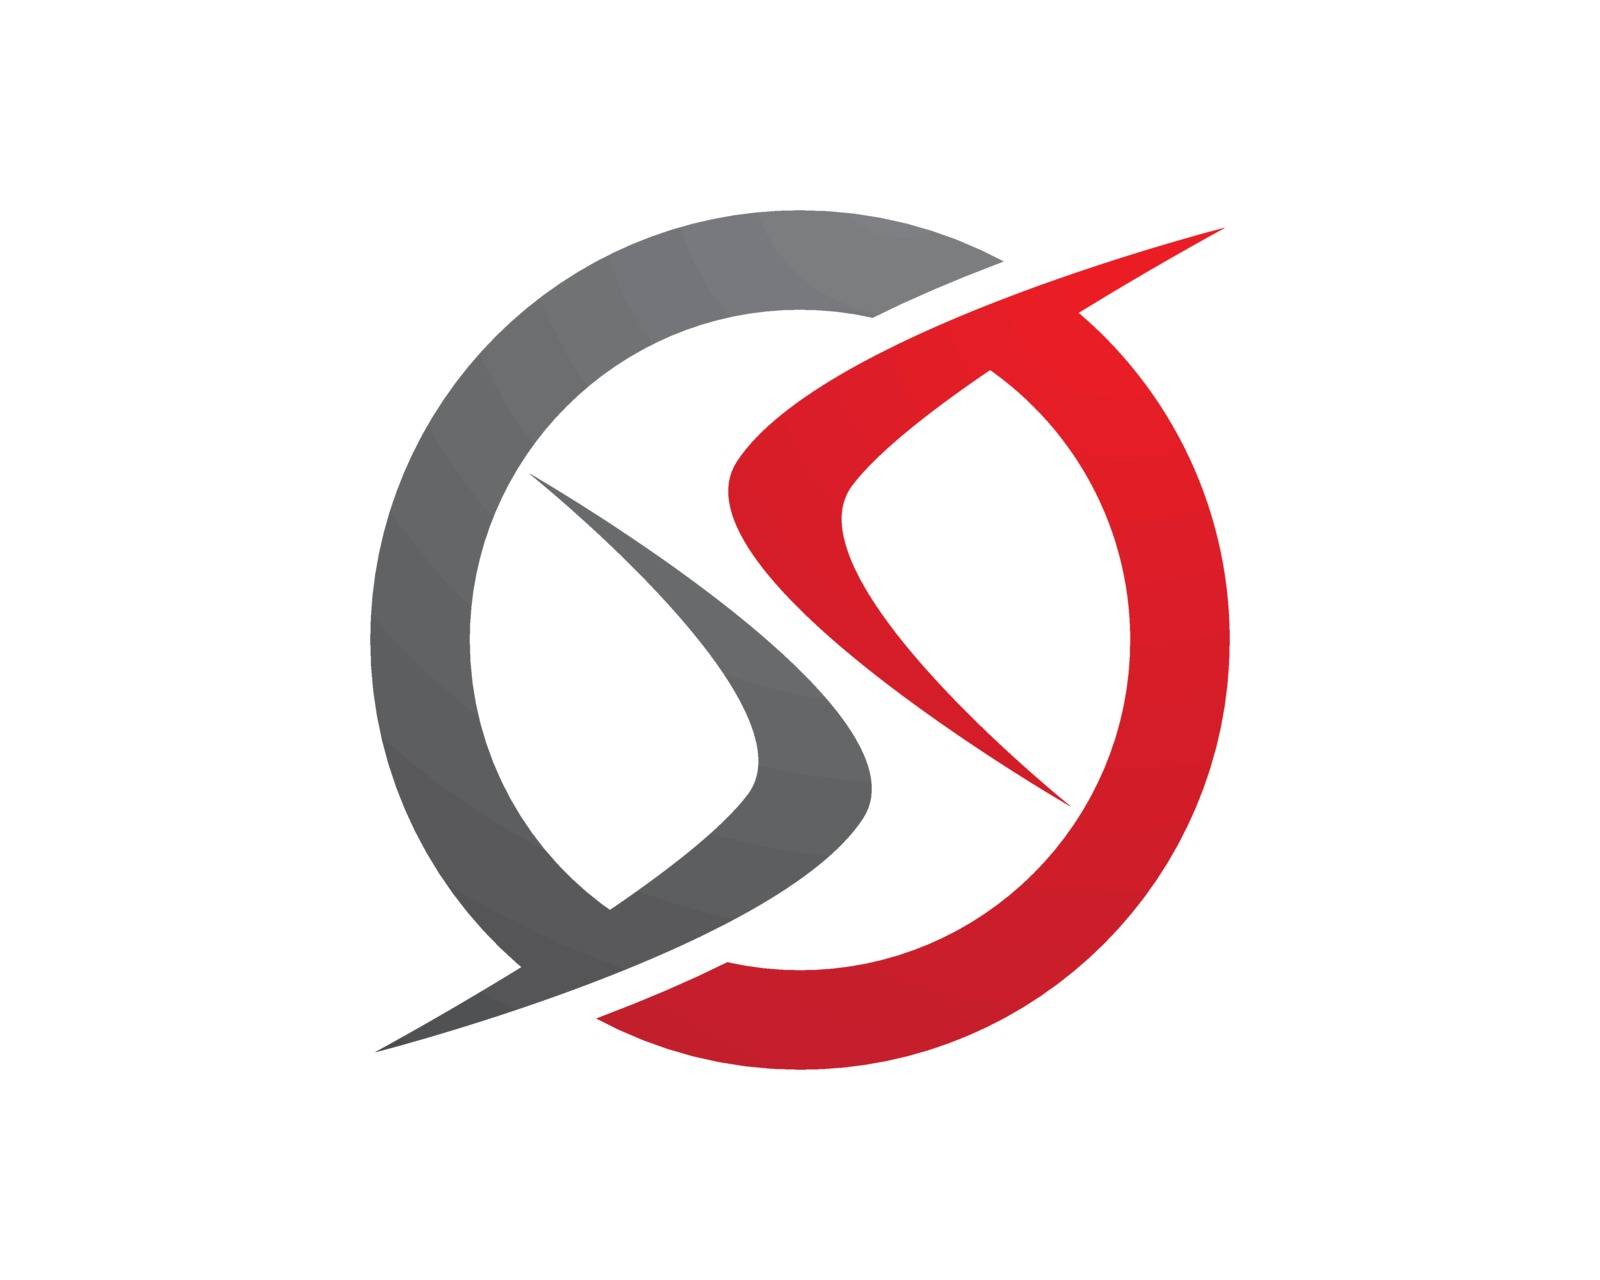 S letter logo by Elaelo